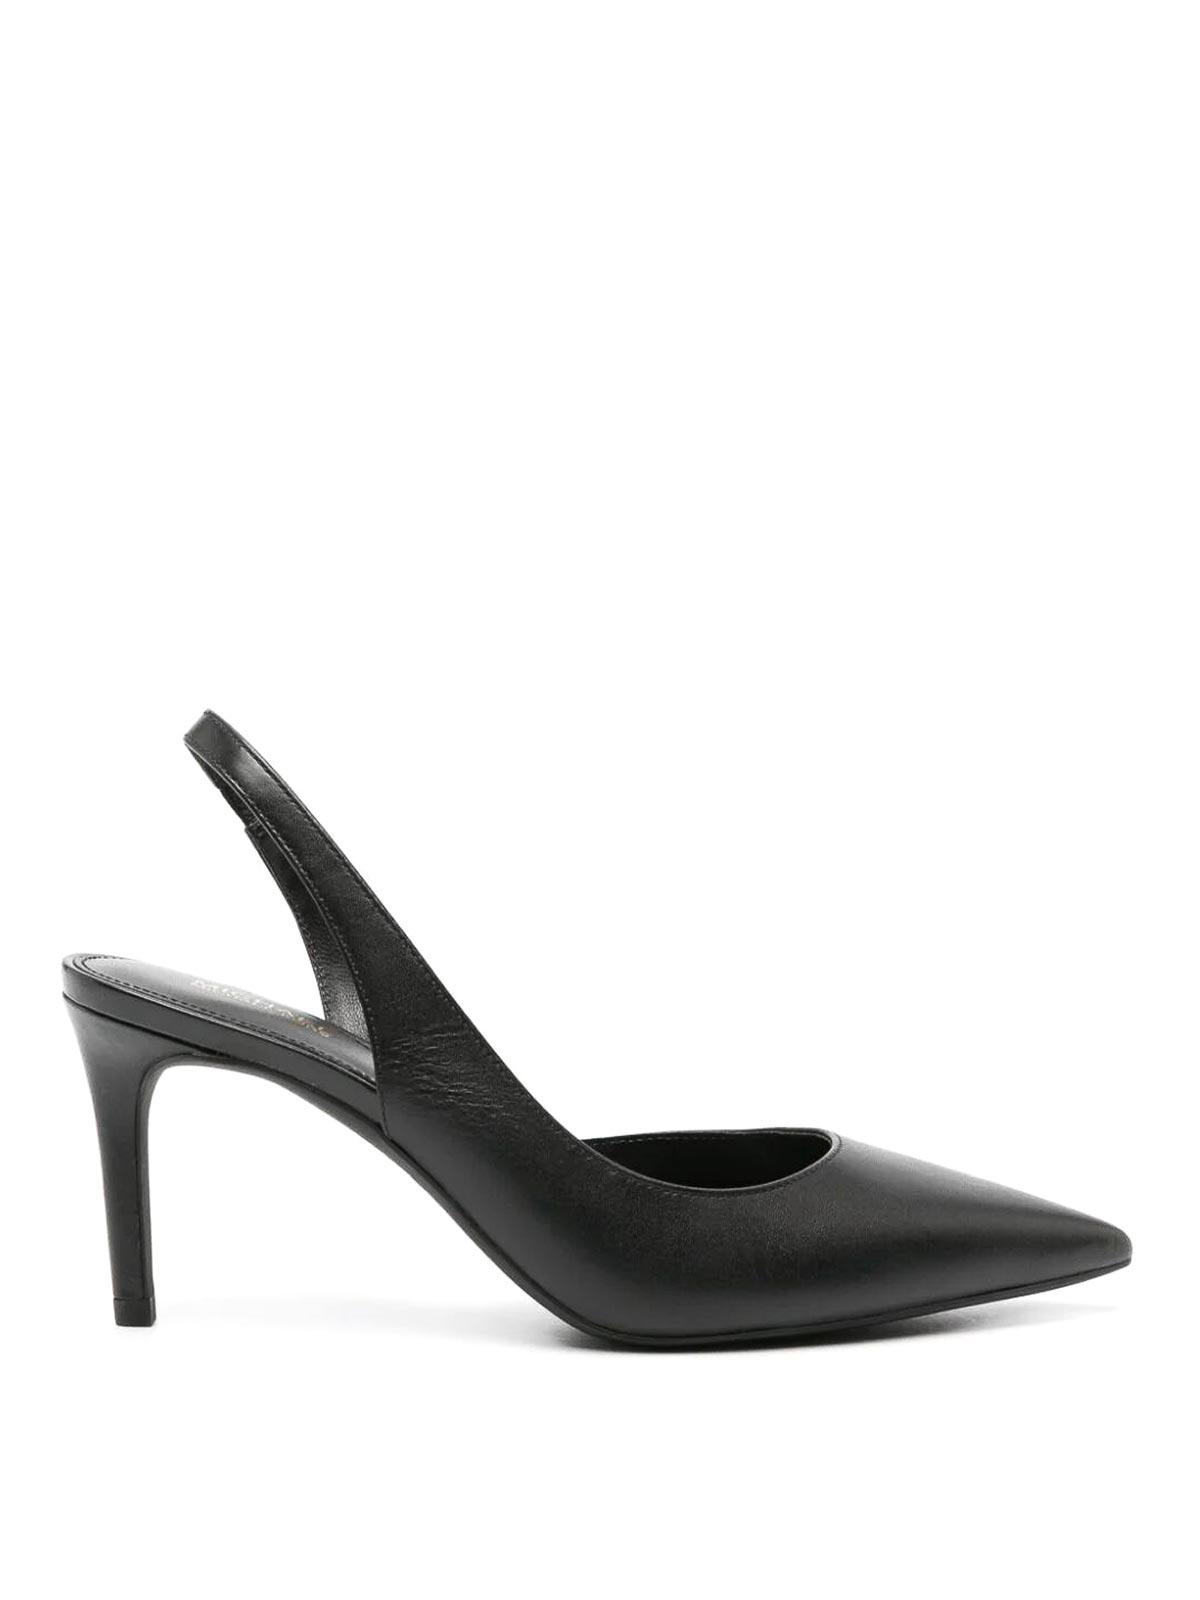 Shop Michael Kors Zapatos De Salón - Alina In Black